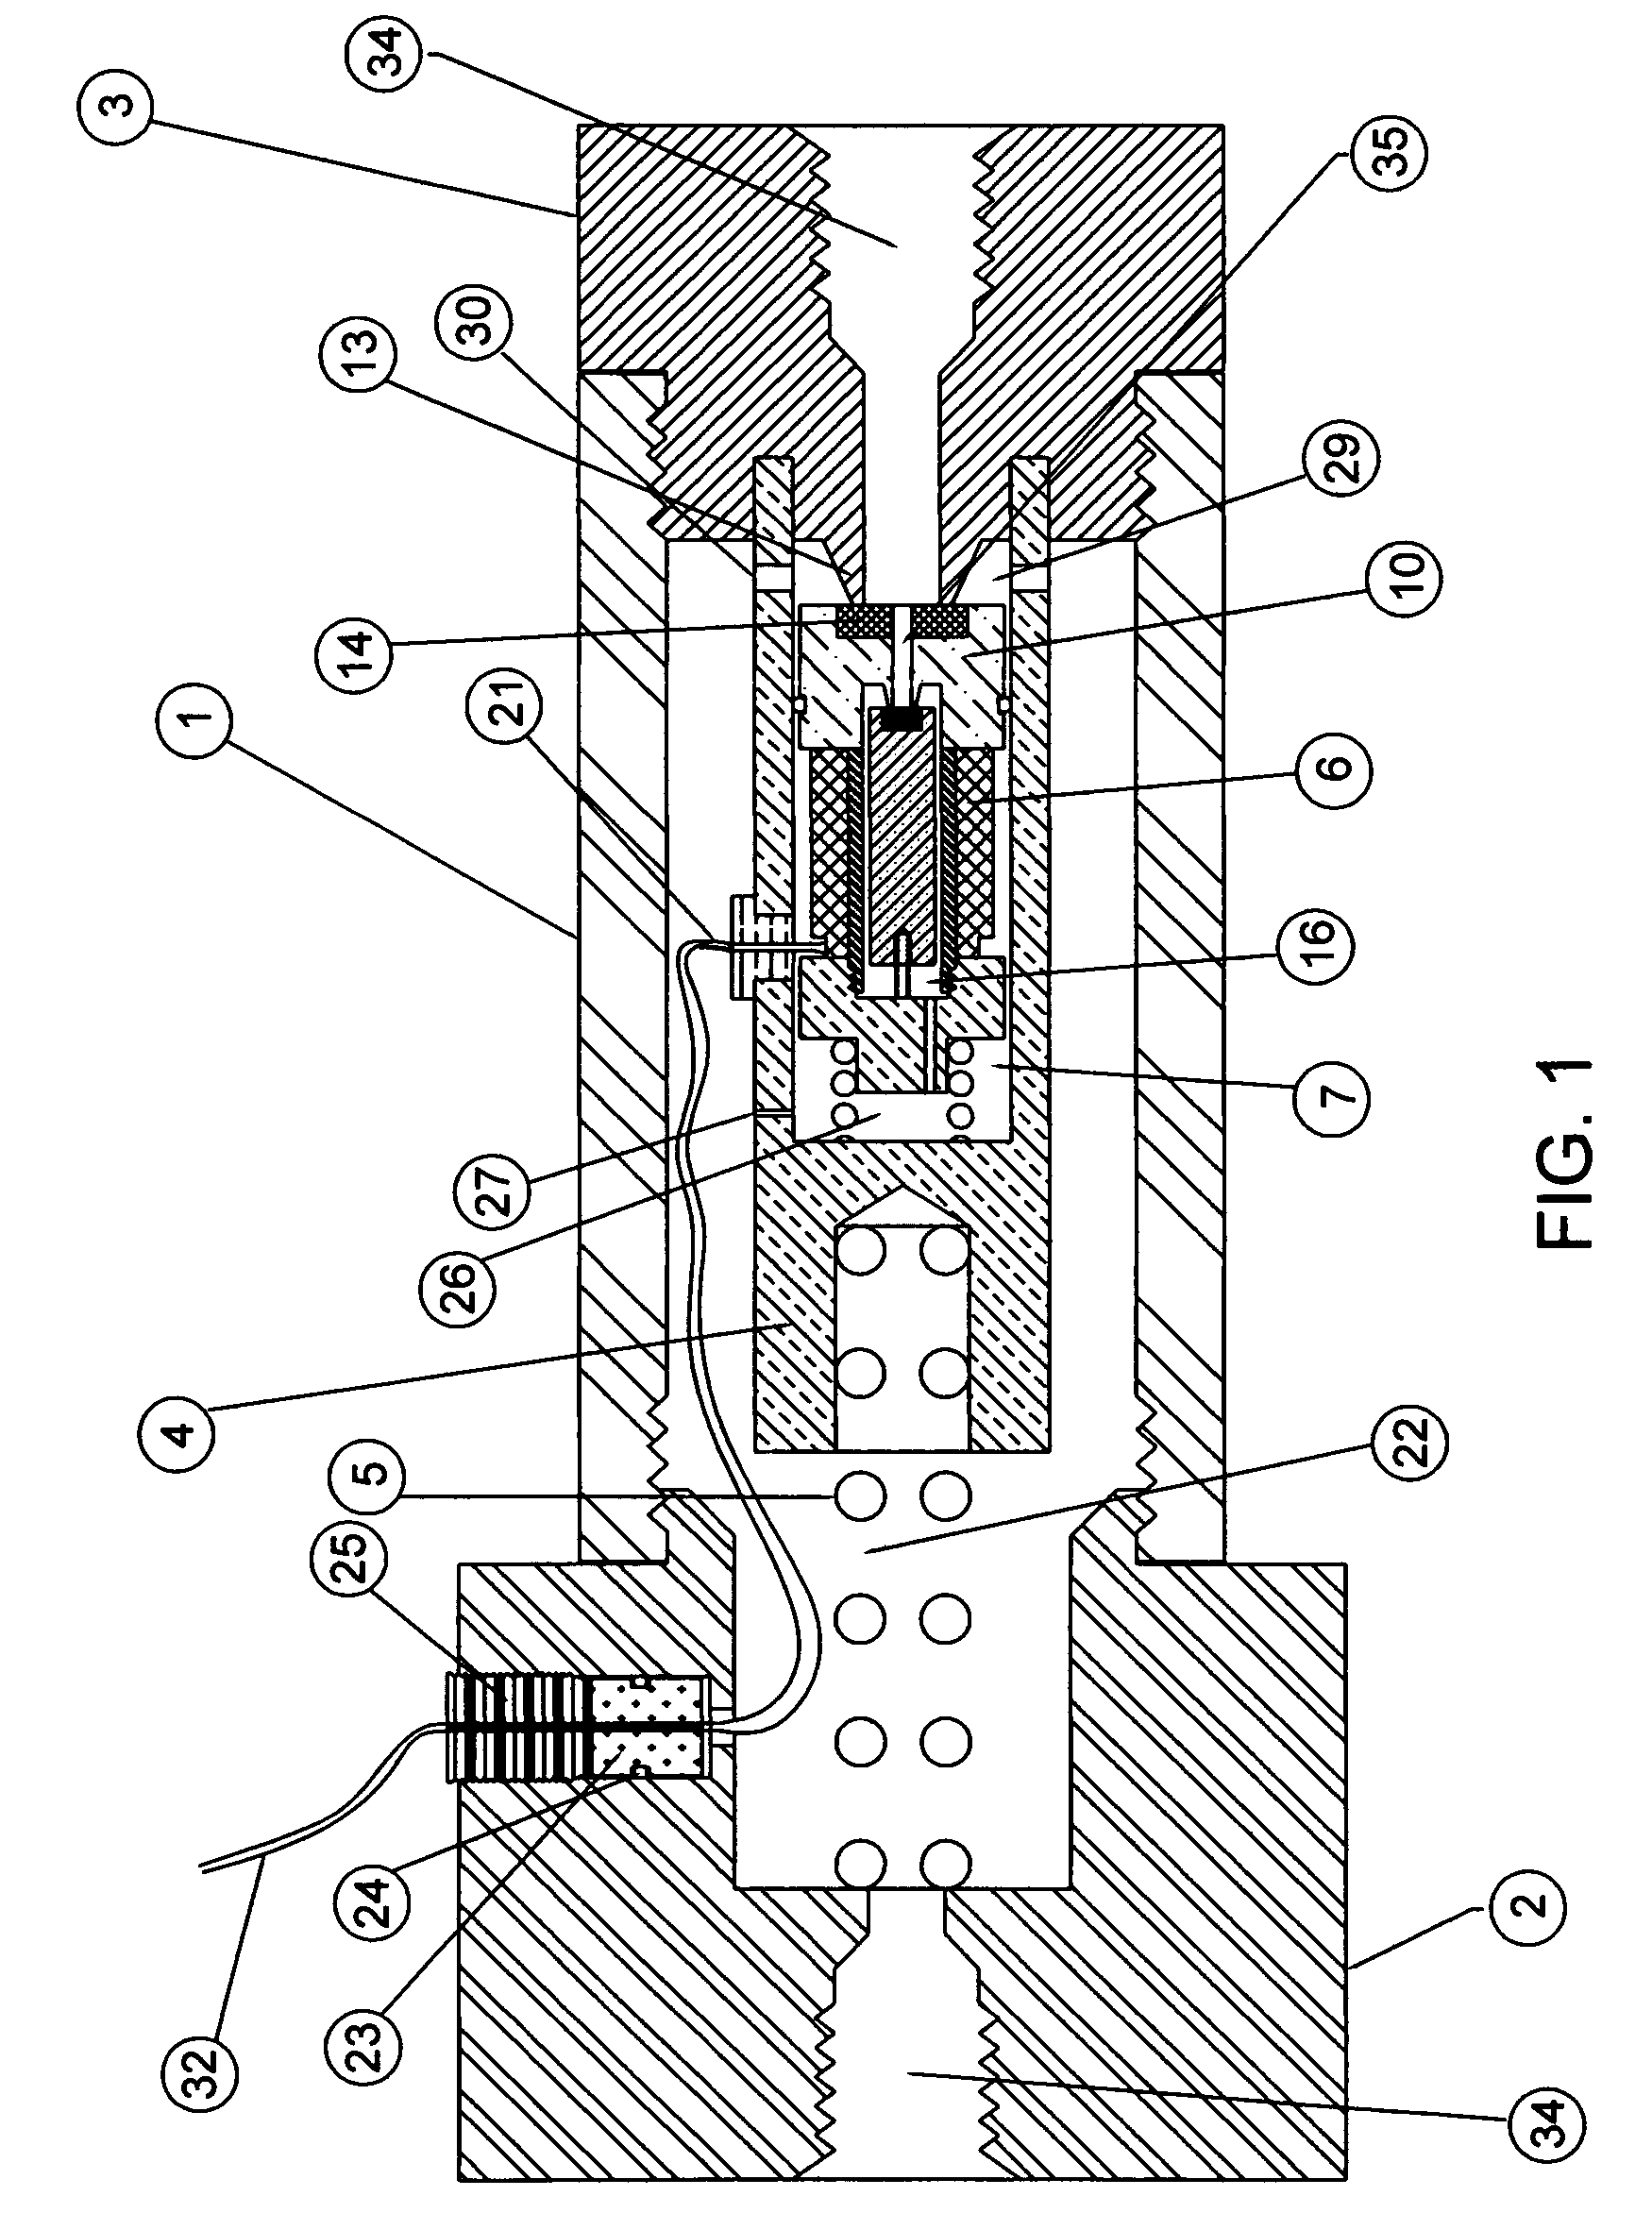 In-tube solenoid gas valve